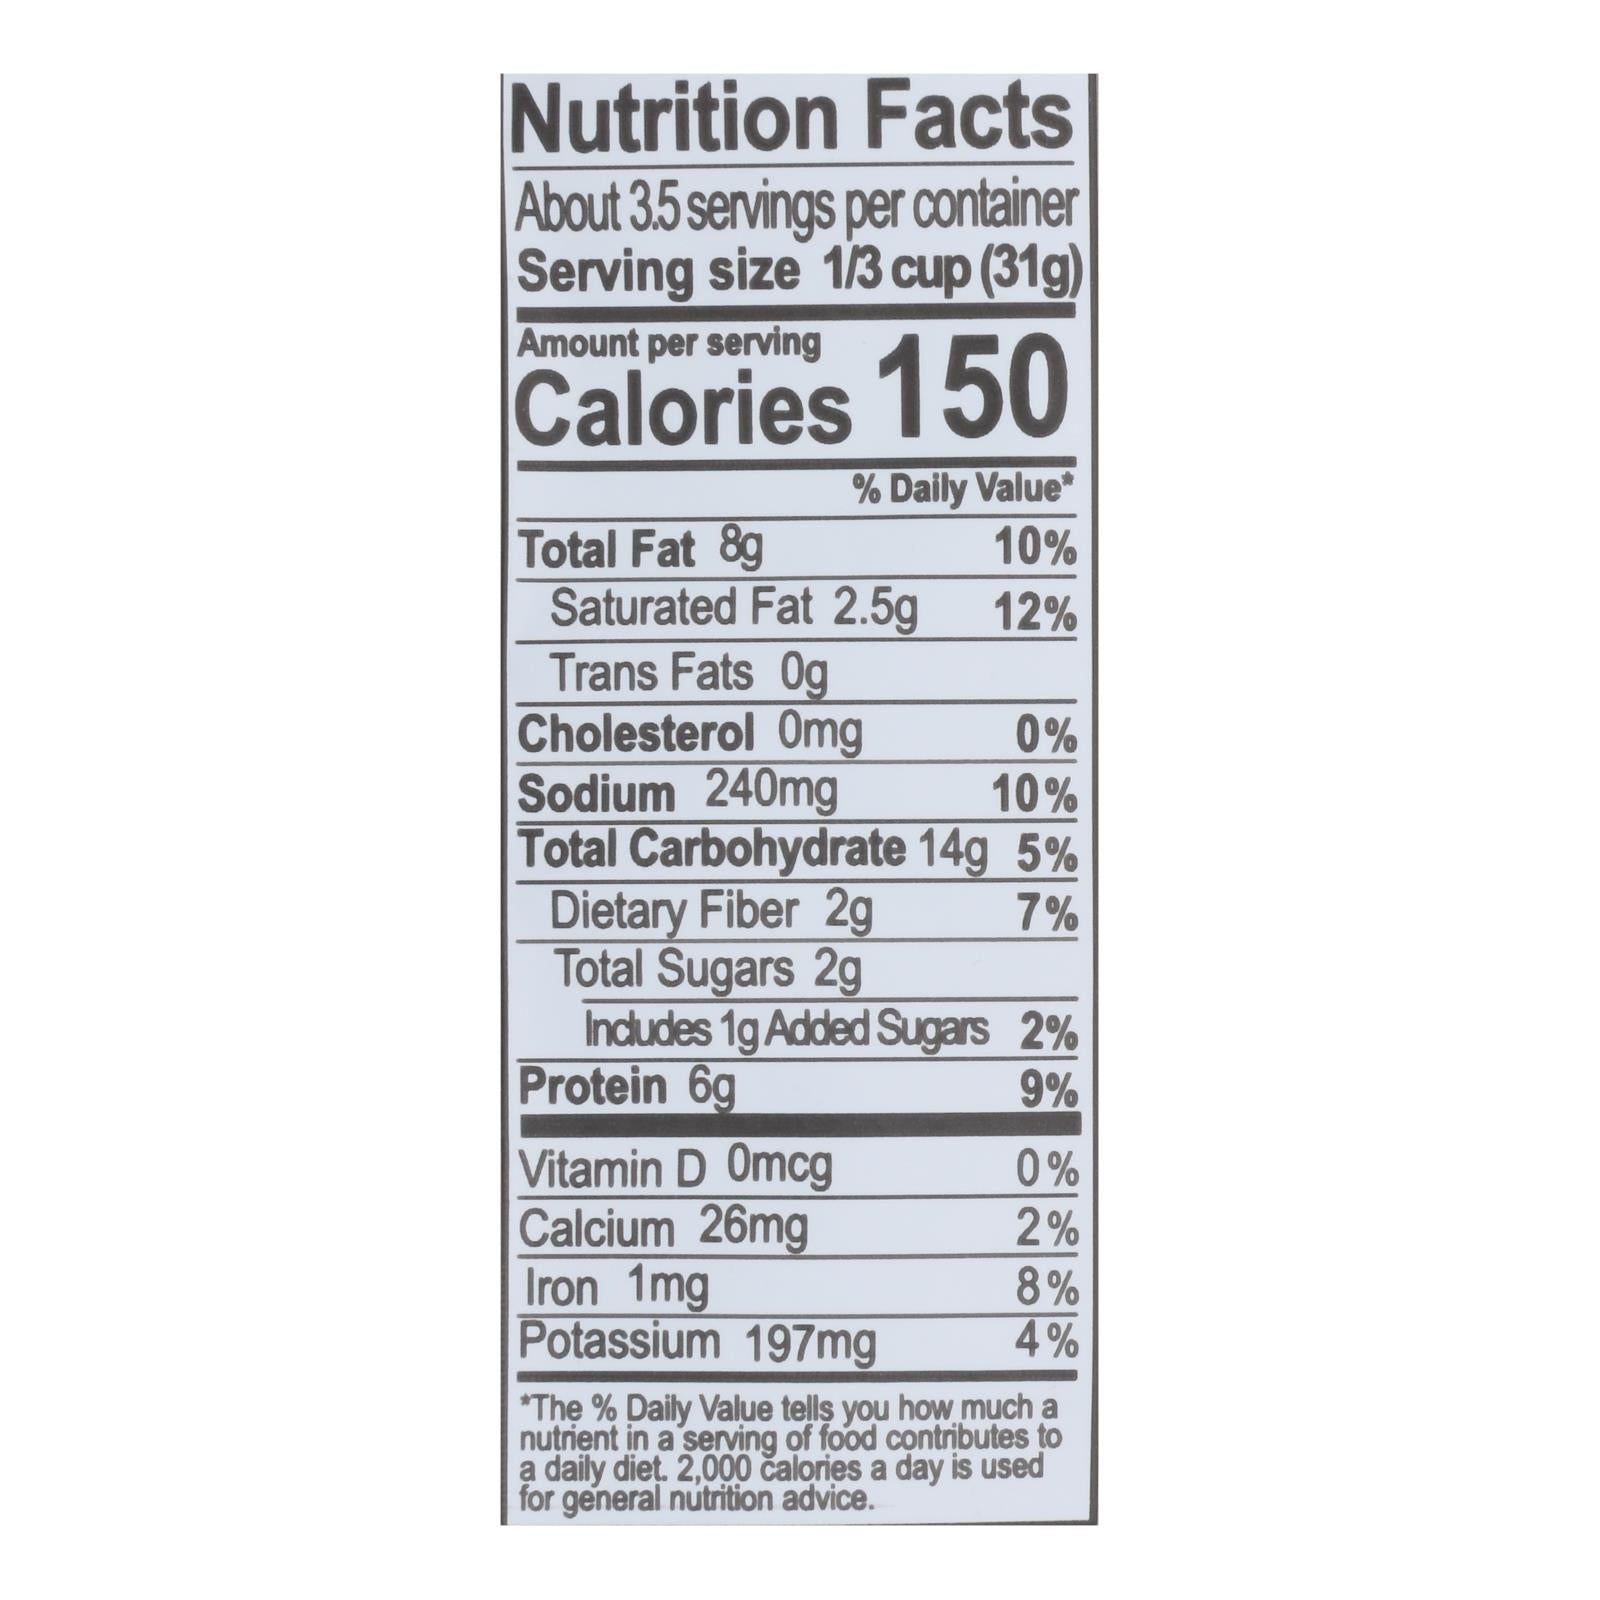 Sahale Snacks - Snack Mx Whtchd Blkppr Bnut - Case Of 6-4 Oz